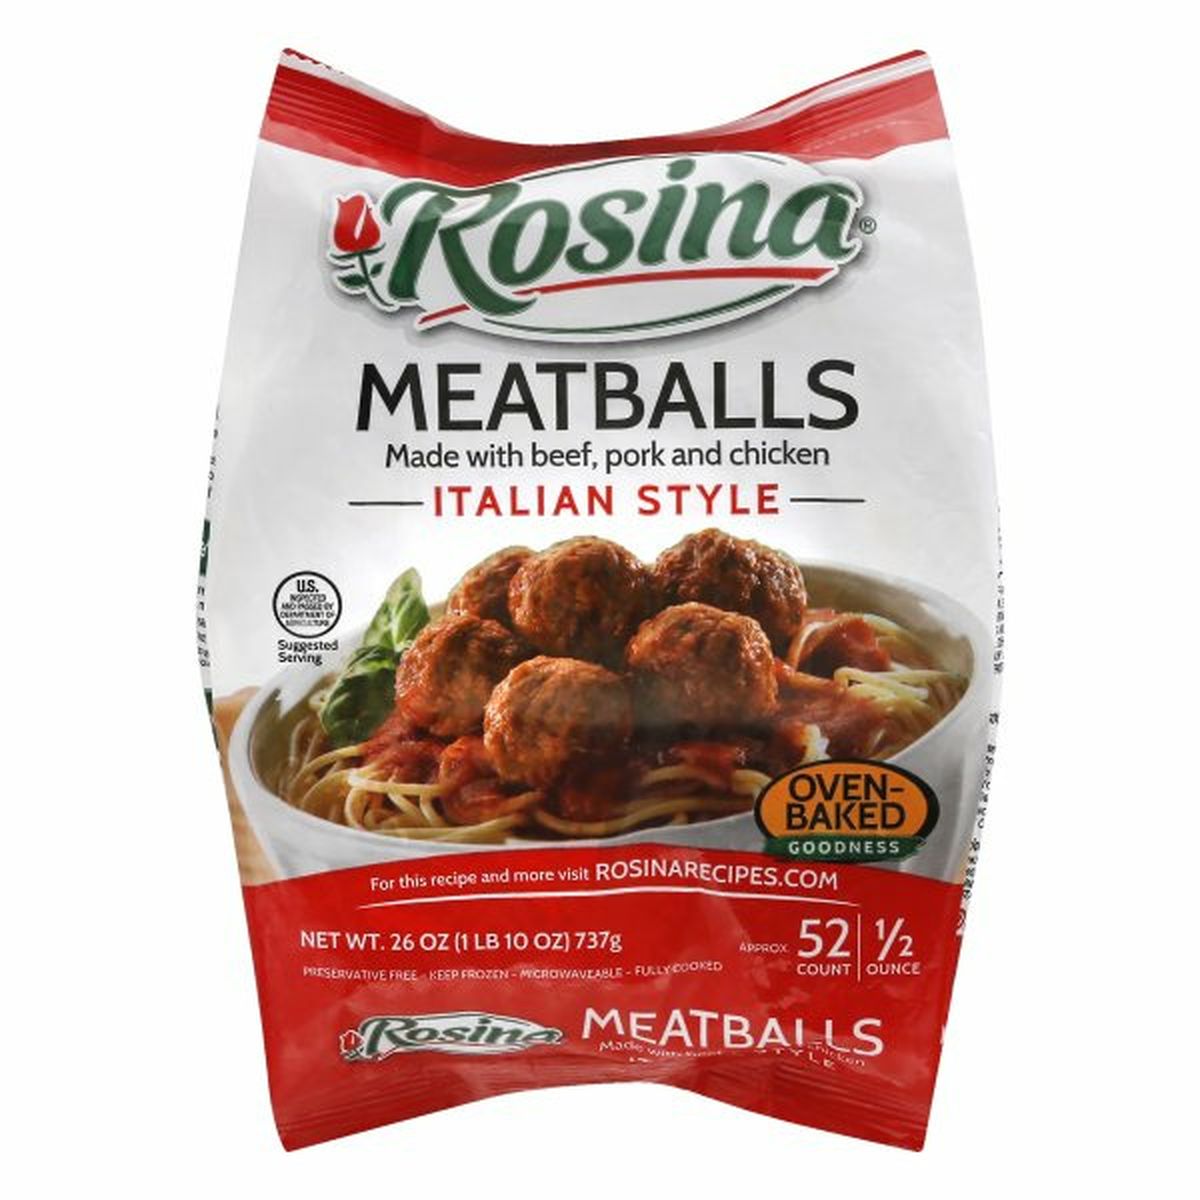 Calories in Rosina Meatballs, Italian Style